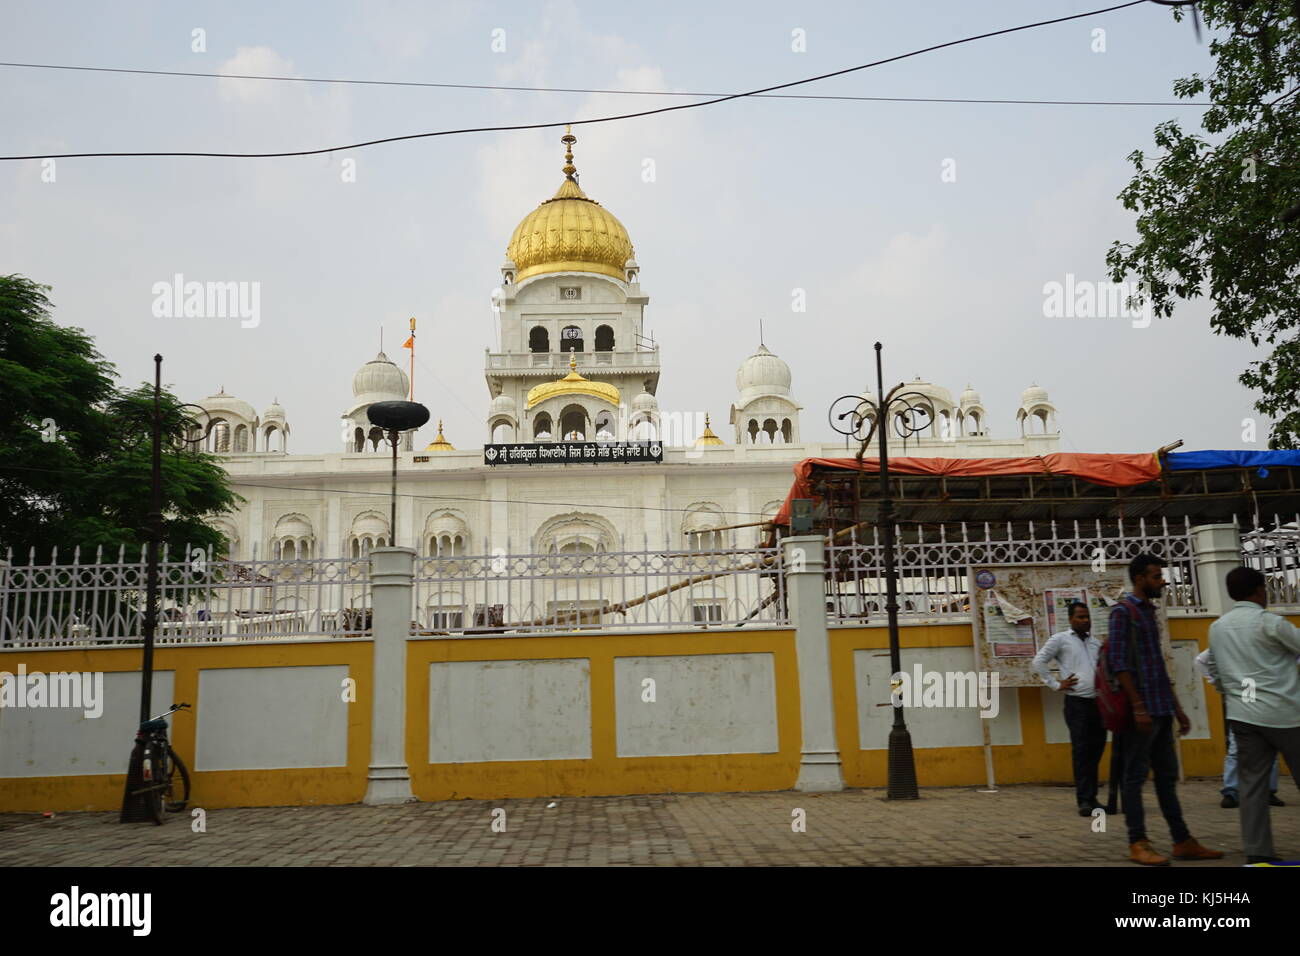 Gurudwara Bangla Sahib; is one of the most prominent Sikh gurdwara, or Sikh house of worship, in Delhi Stock Photo